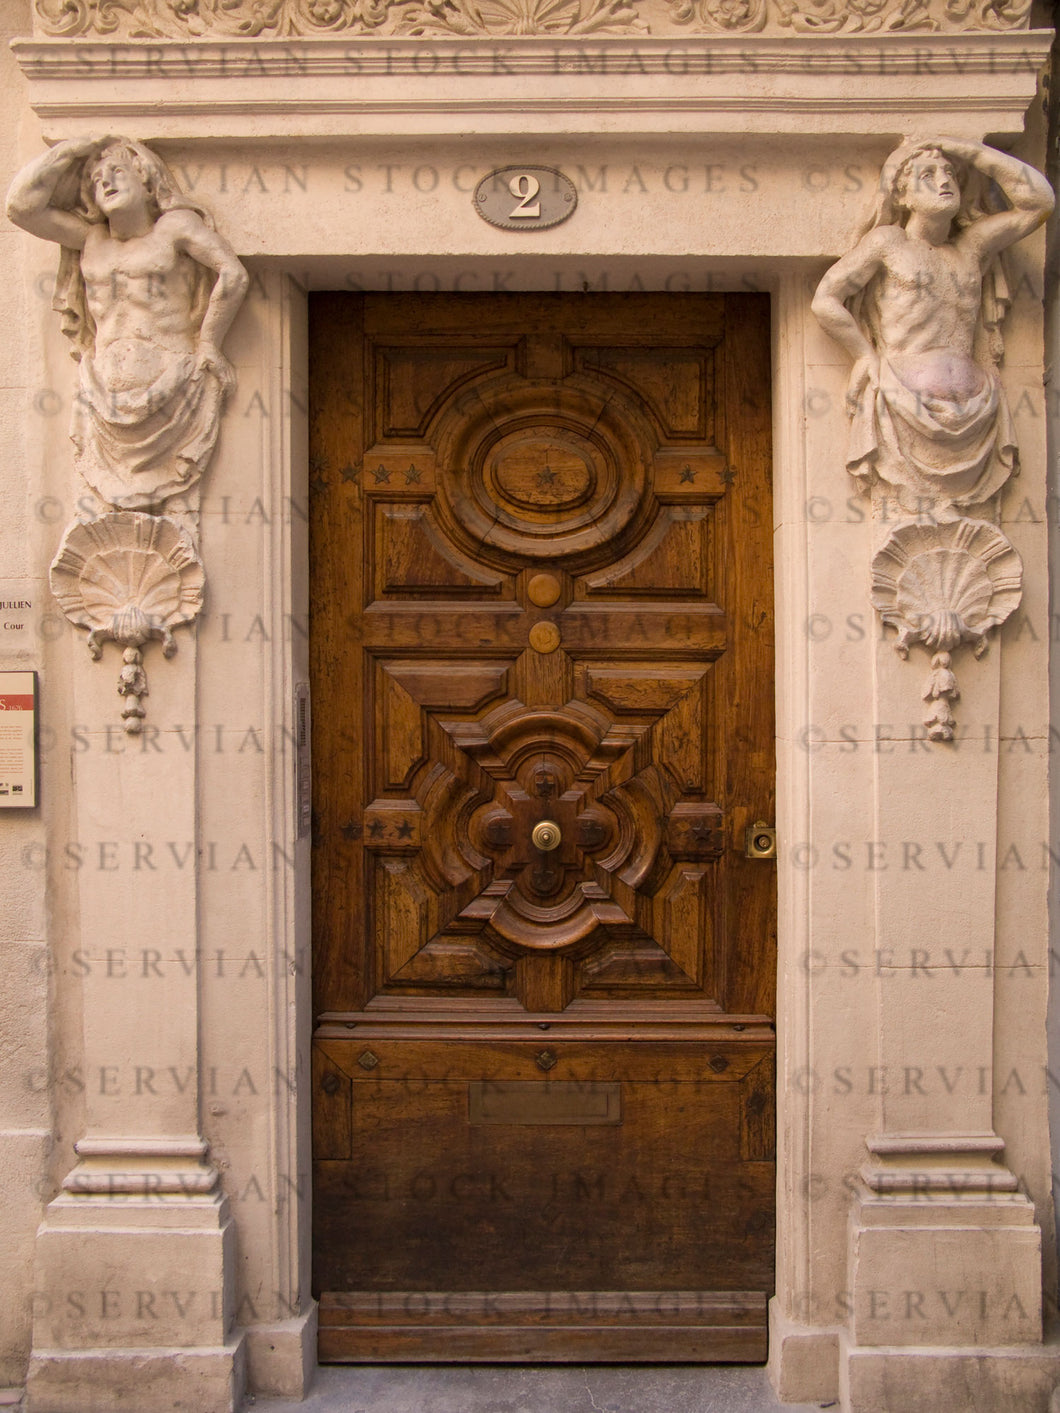 Historical building - Doorway, France (Nick 1451)